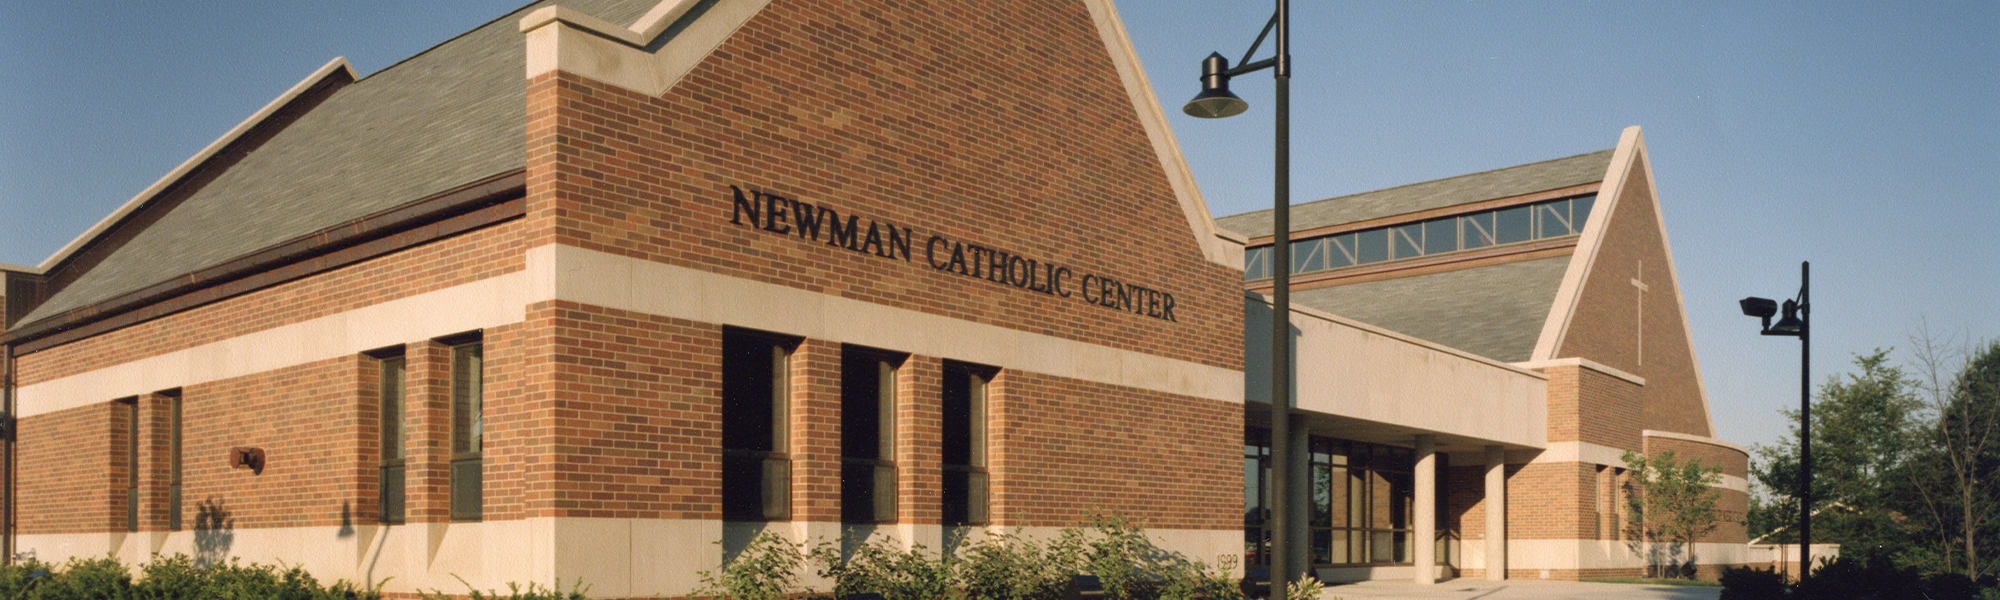 newman catholic center